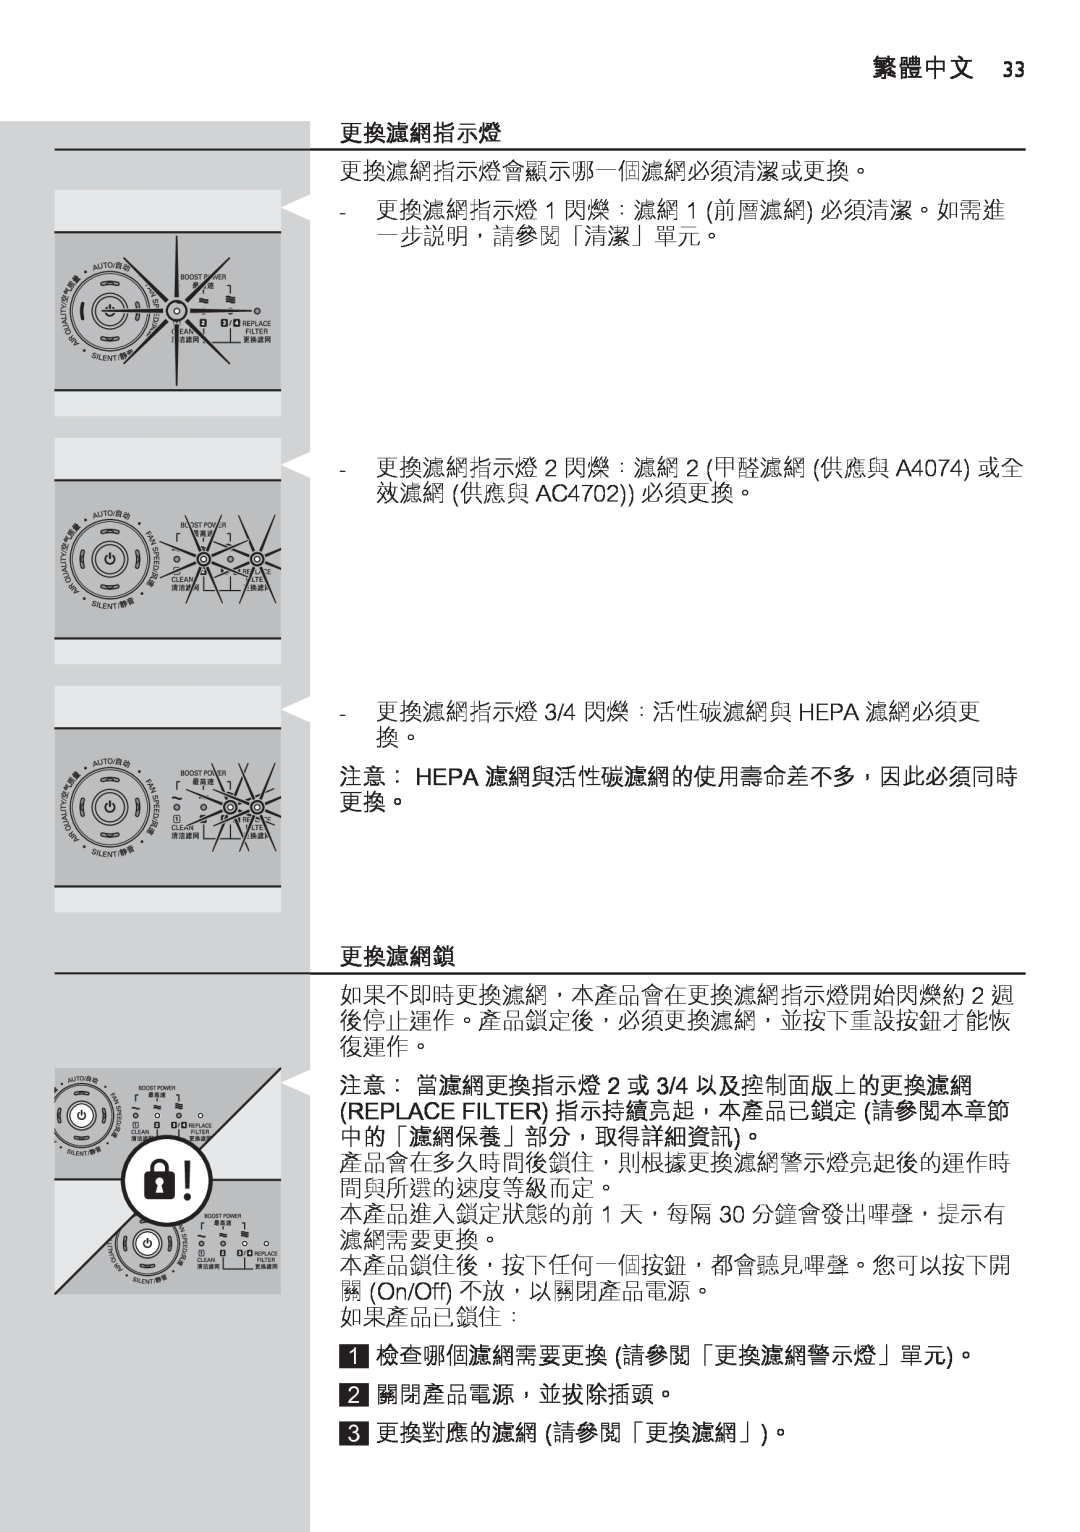 Philips AC4074 manual 更換濾網指示燈, 更換濾網鎖, 繁體中文 